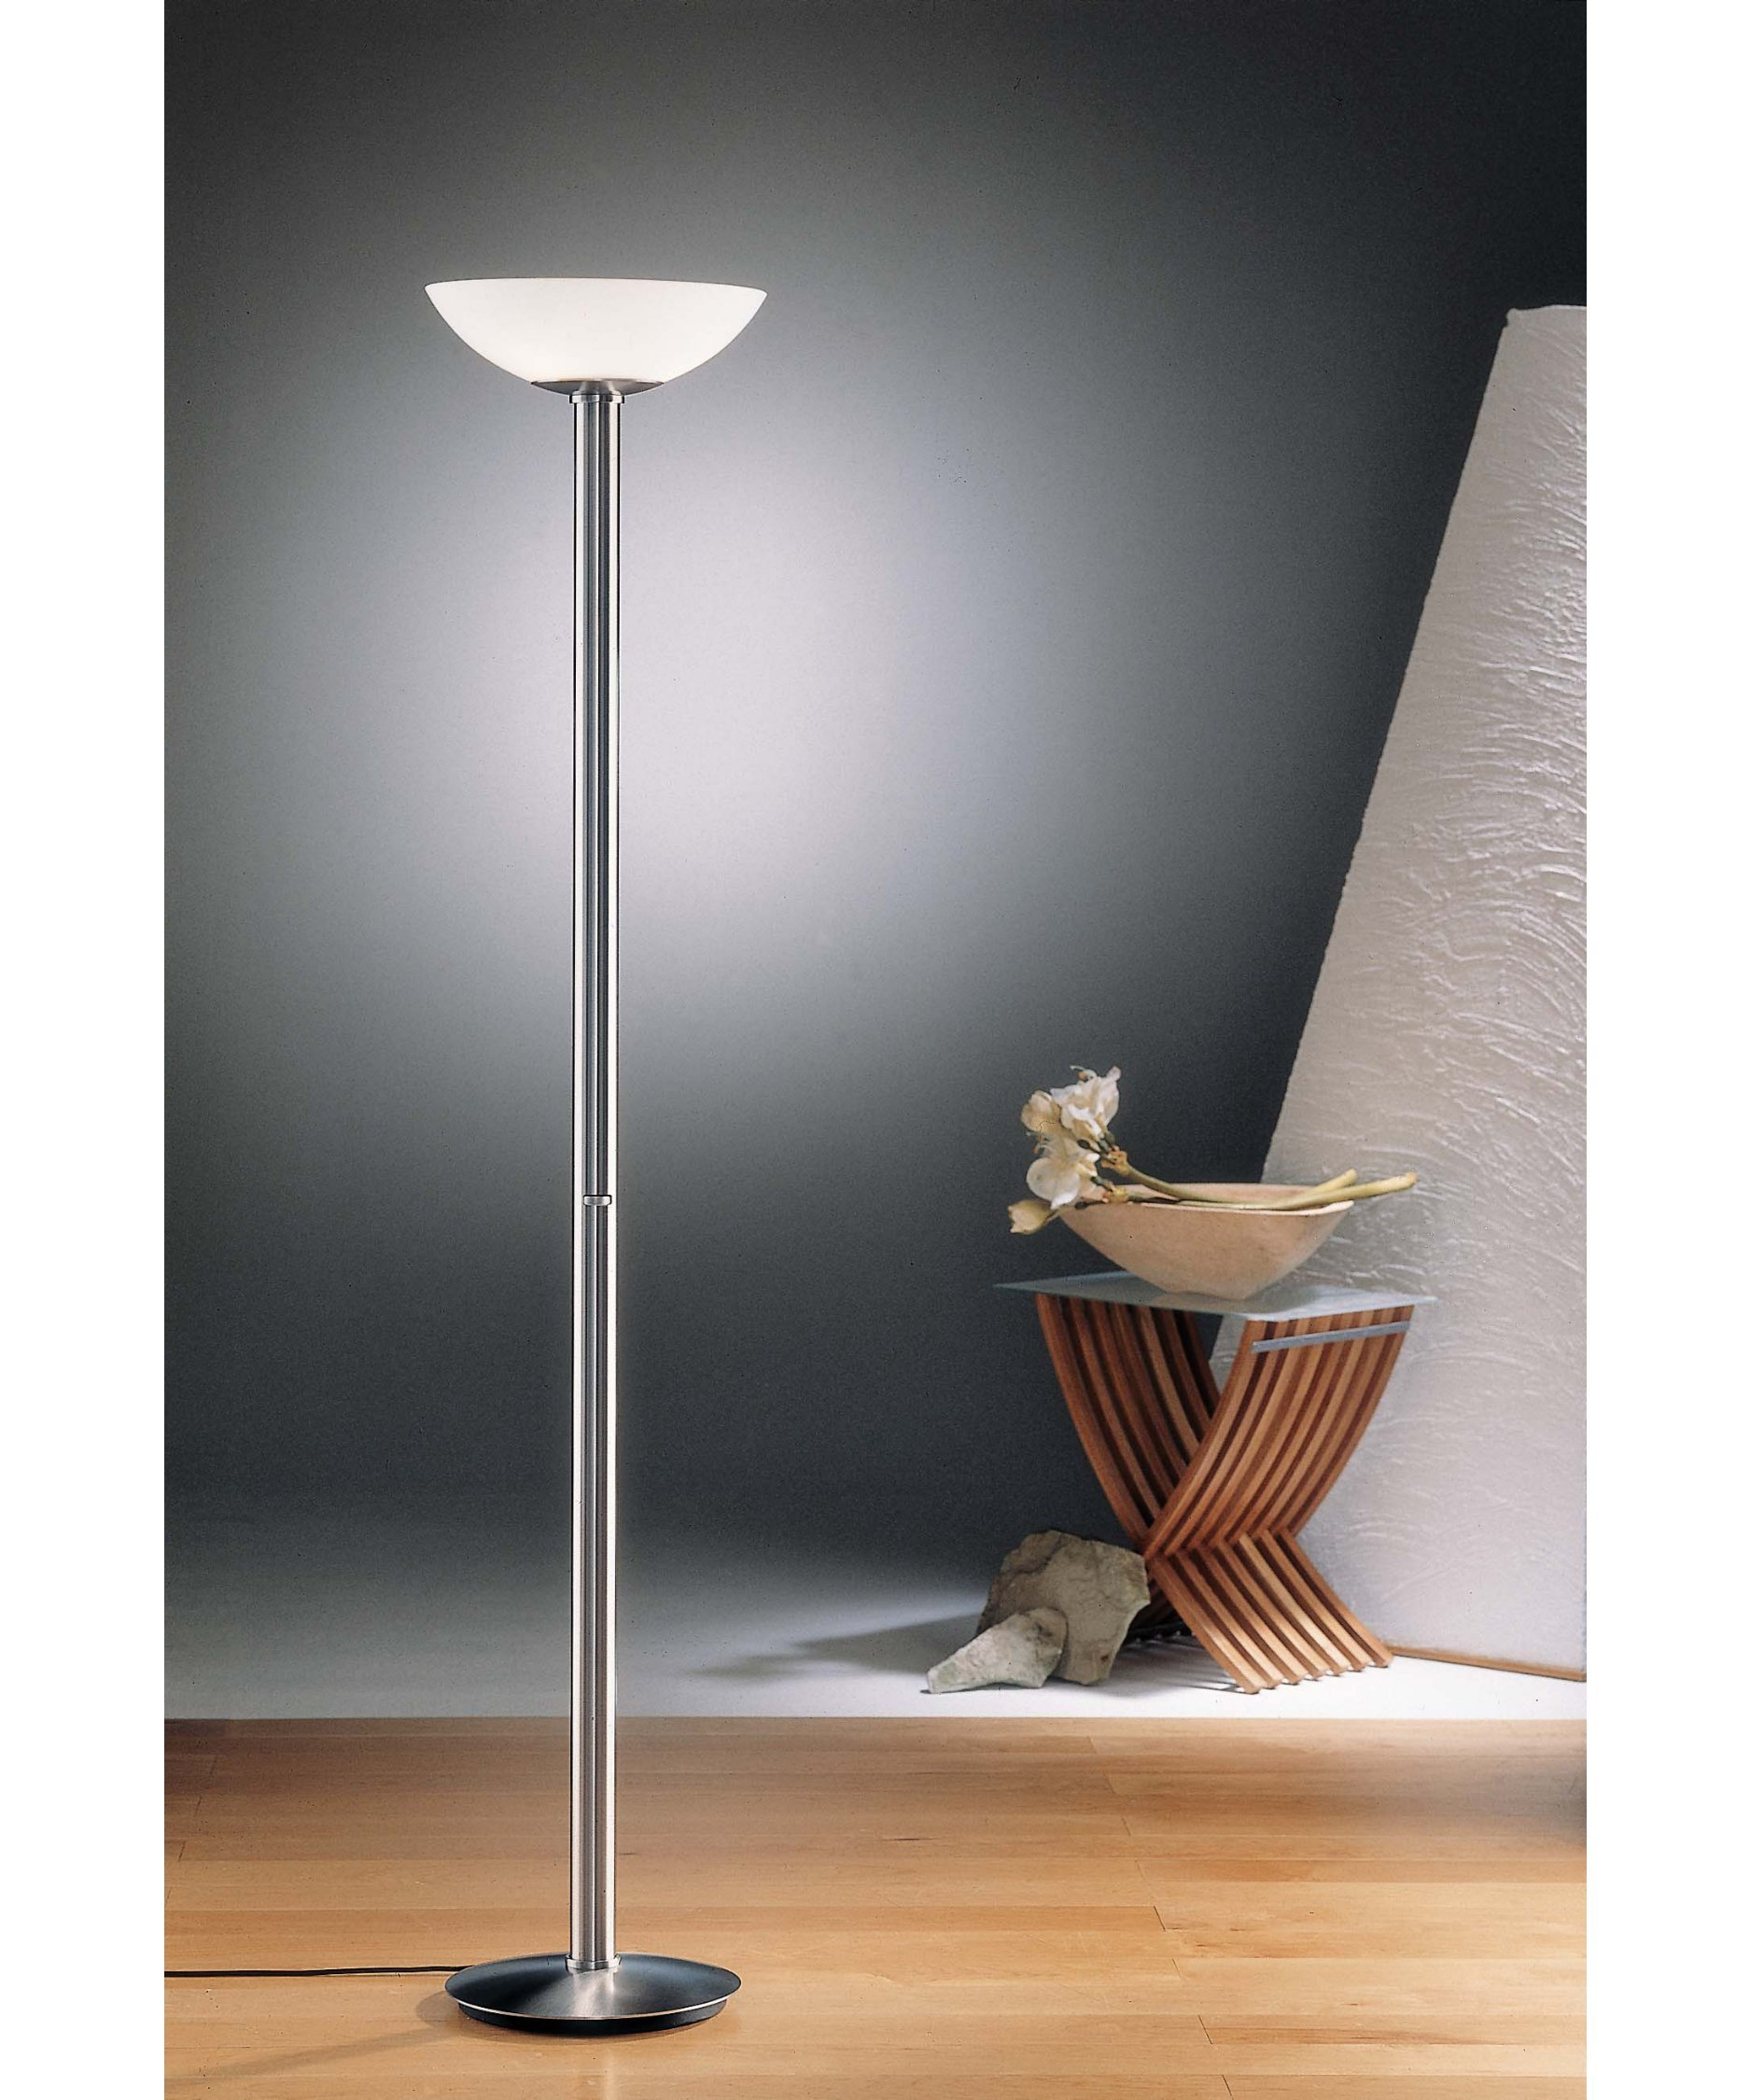 Kaoyi Floor Lamp Morganallen Designs 2 Bulb Table Lamp for size 1875 X 2250